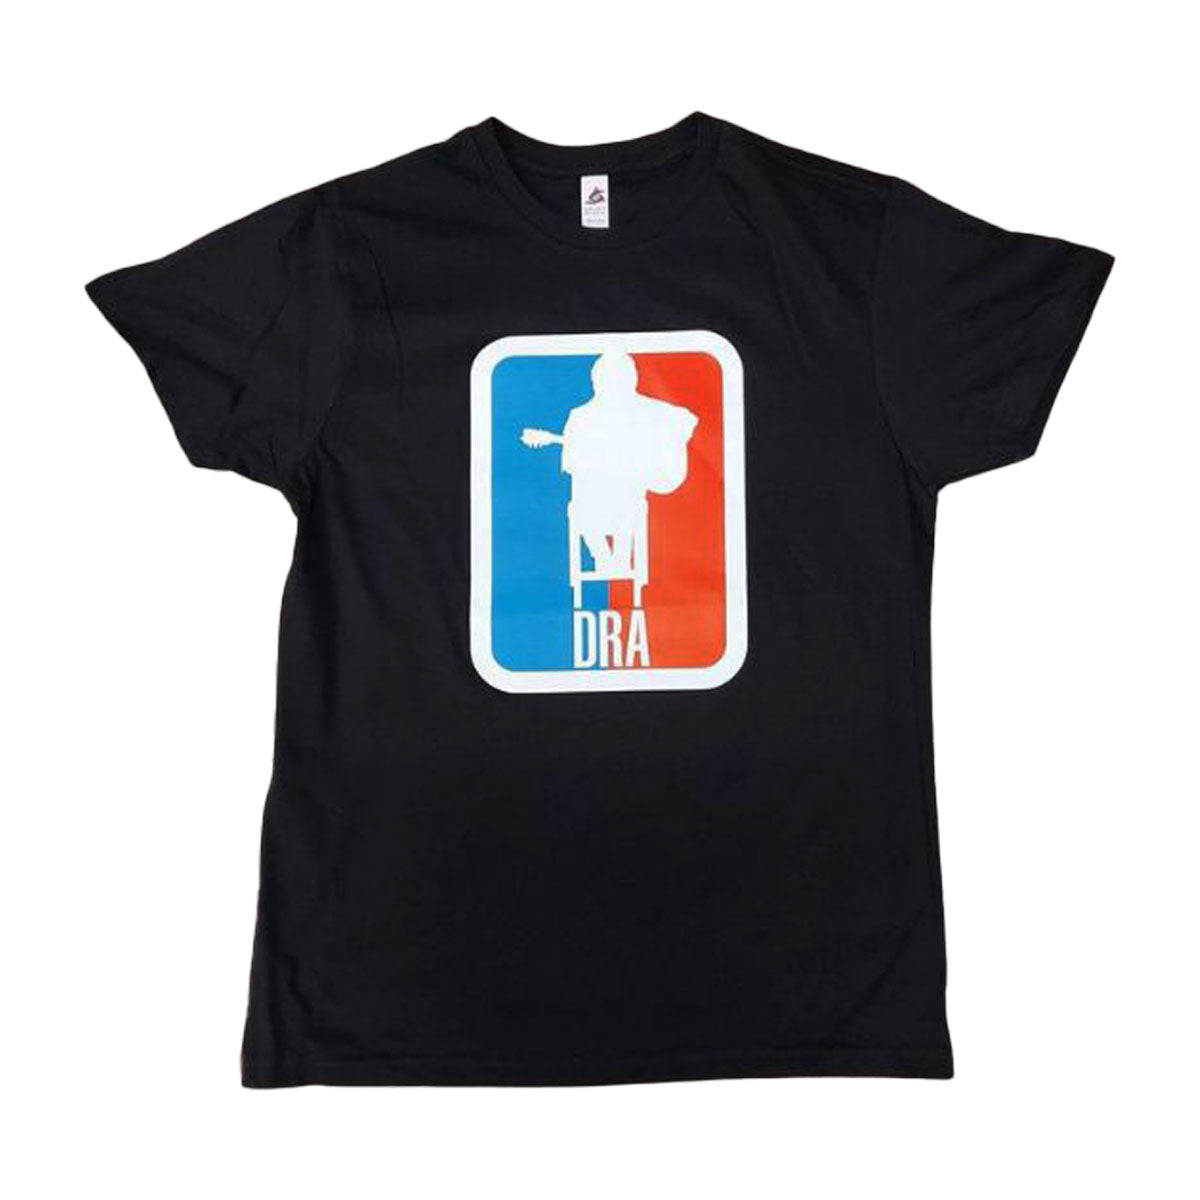 The NBA T-Shirt